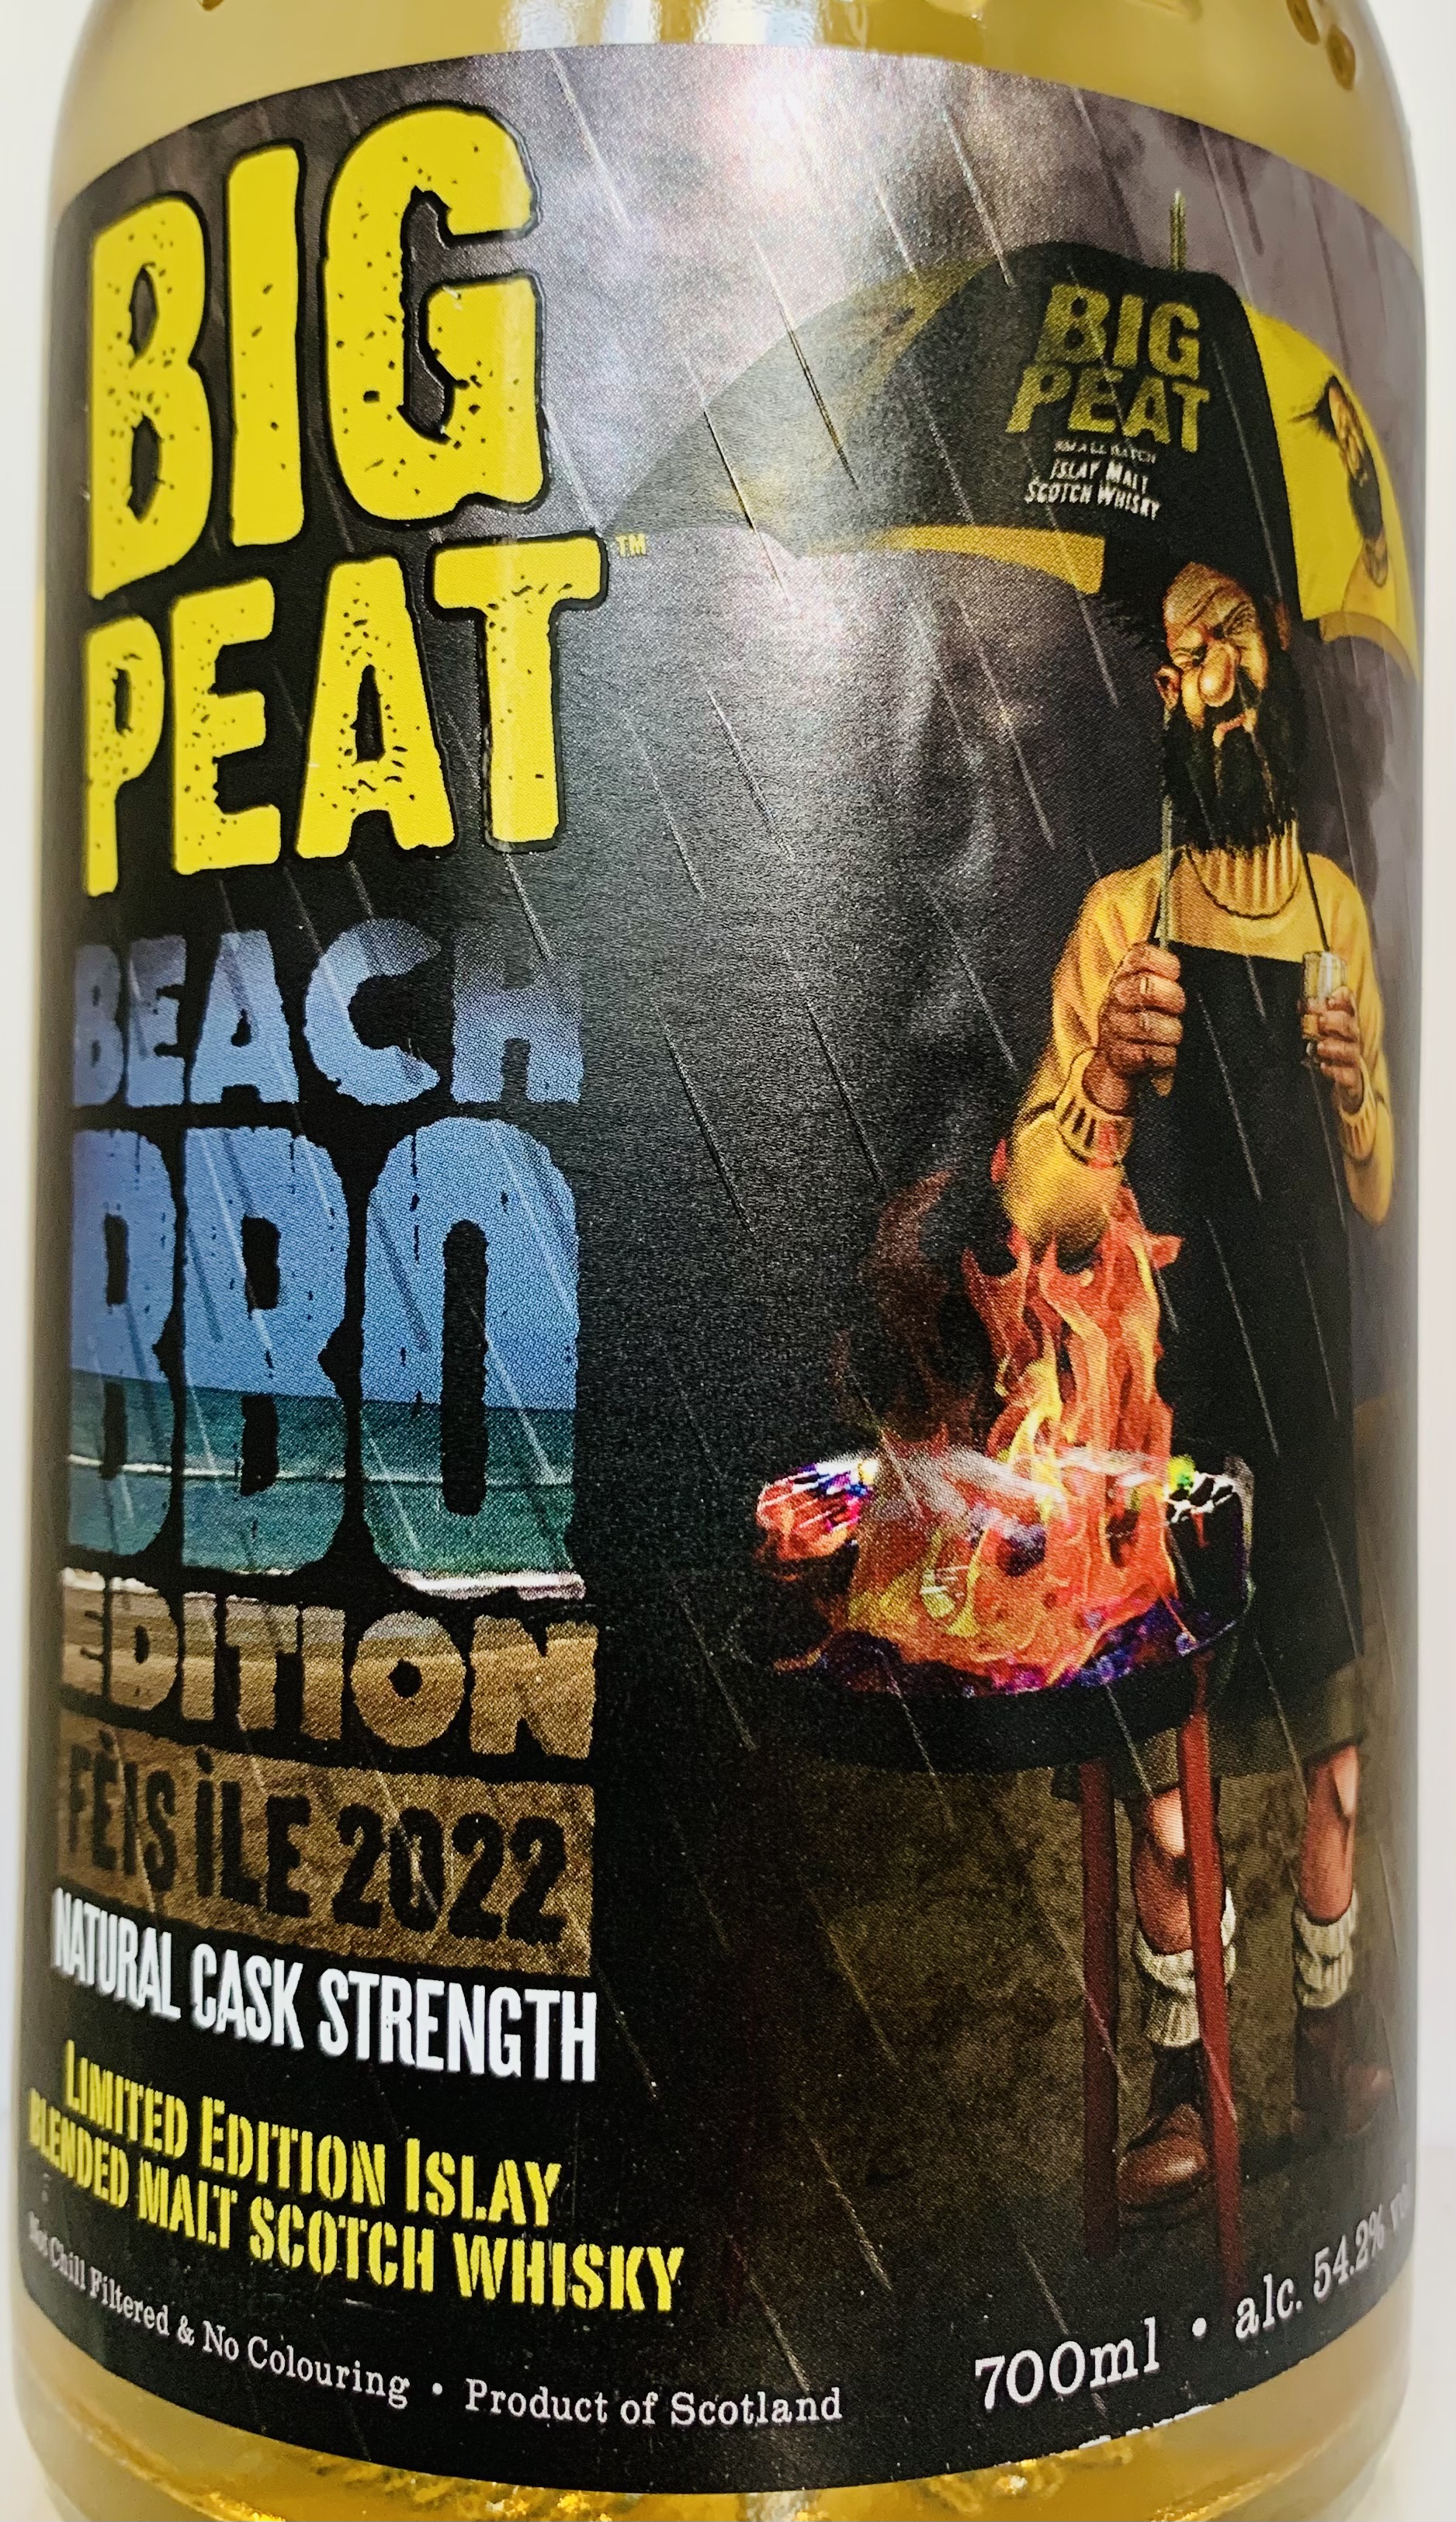 Big Peat Beach BBQ Feis Ile 2022 Edition DL